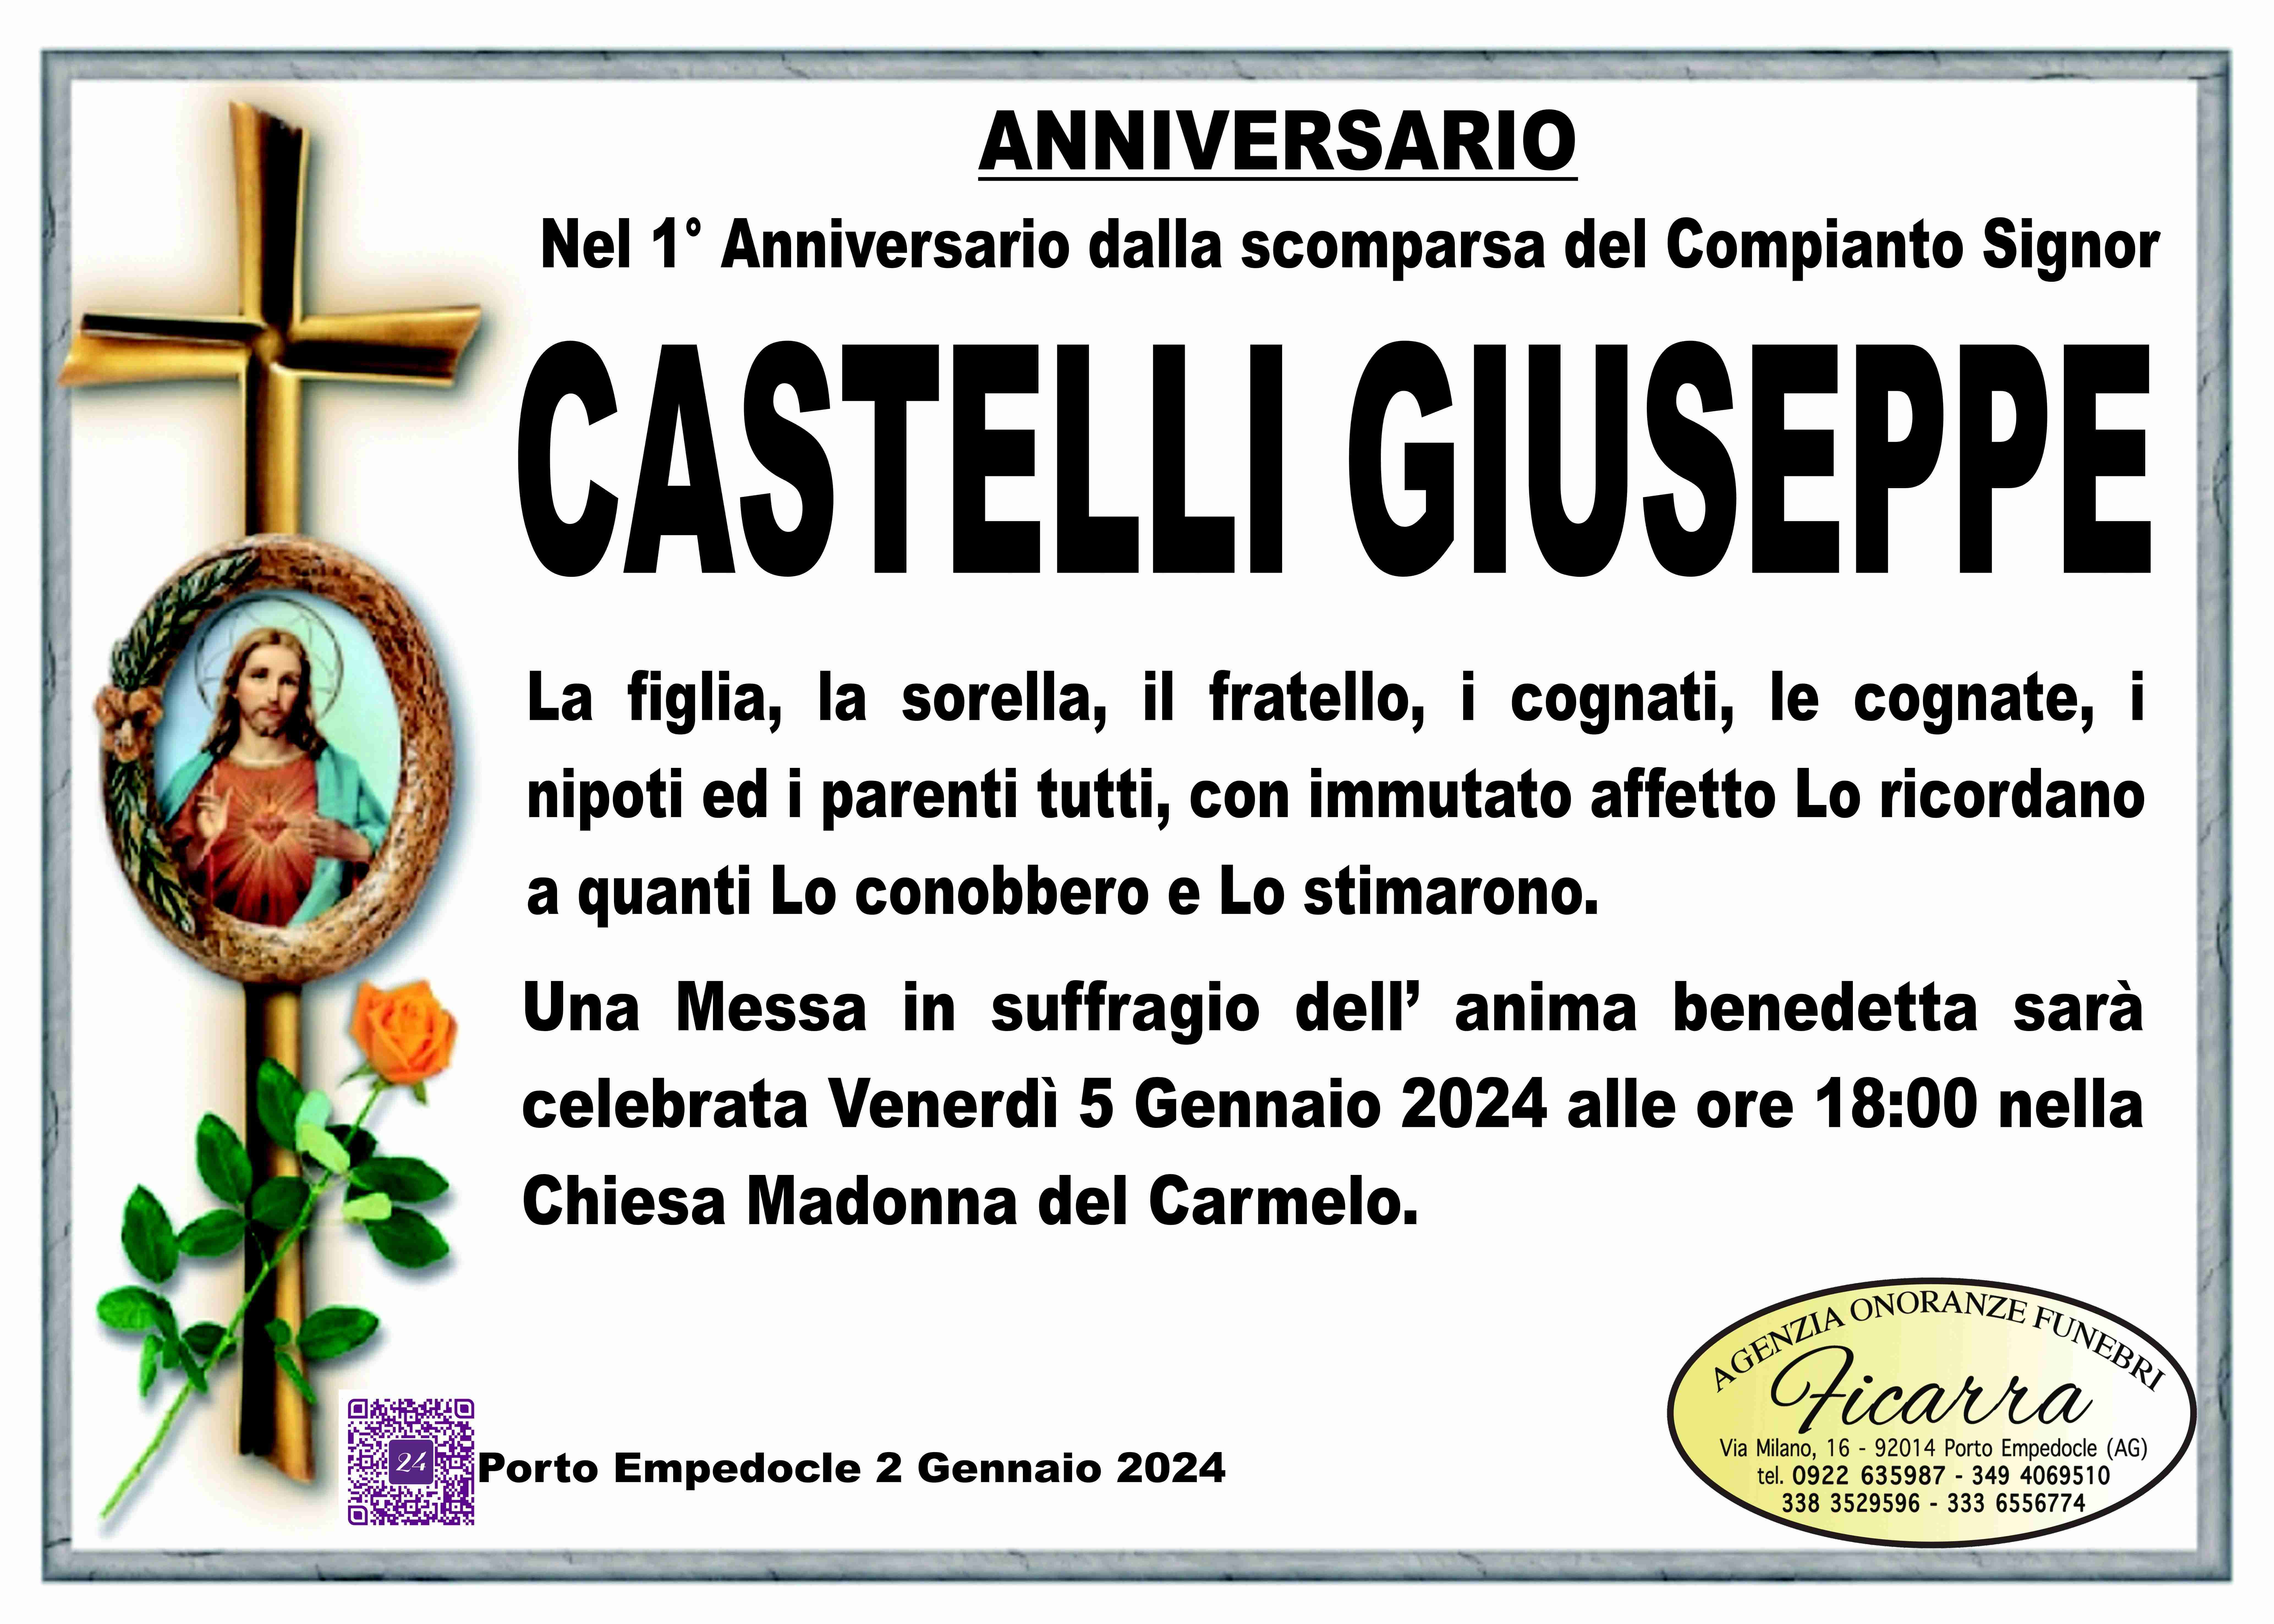 Giuseppe Castelli